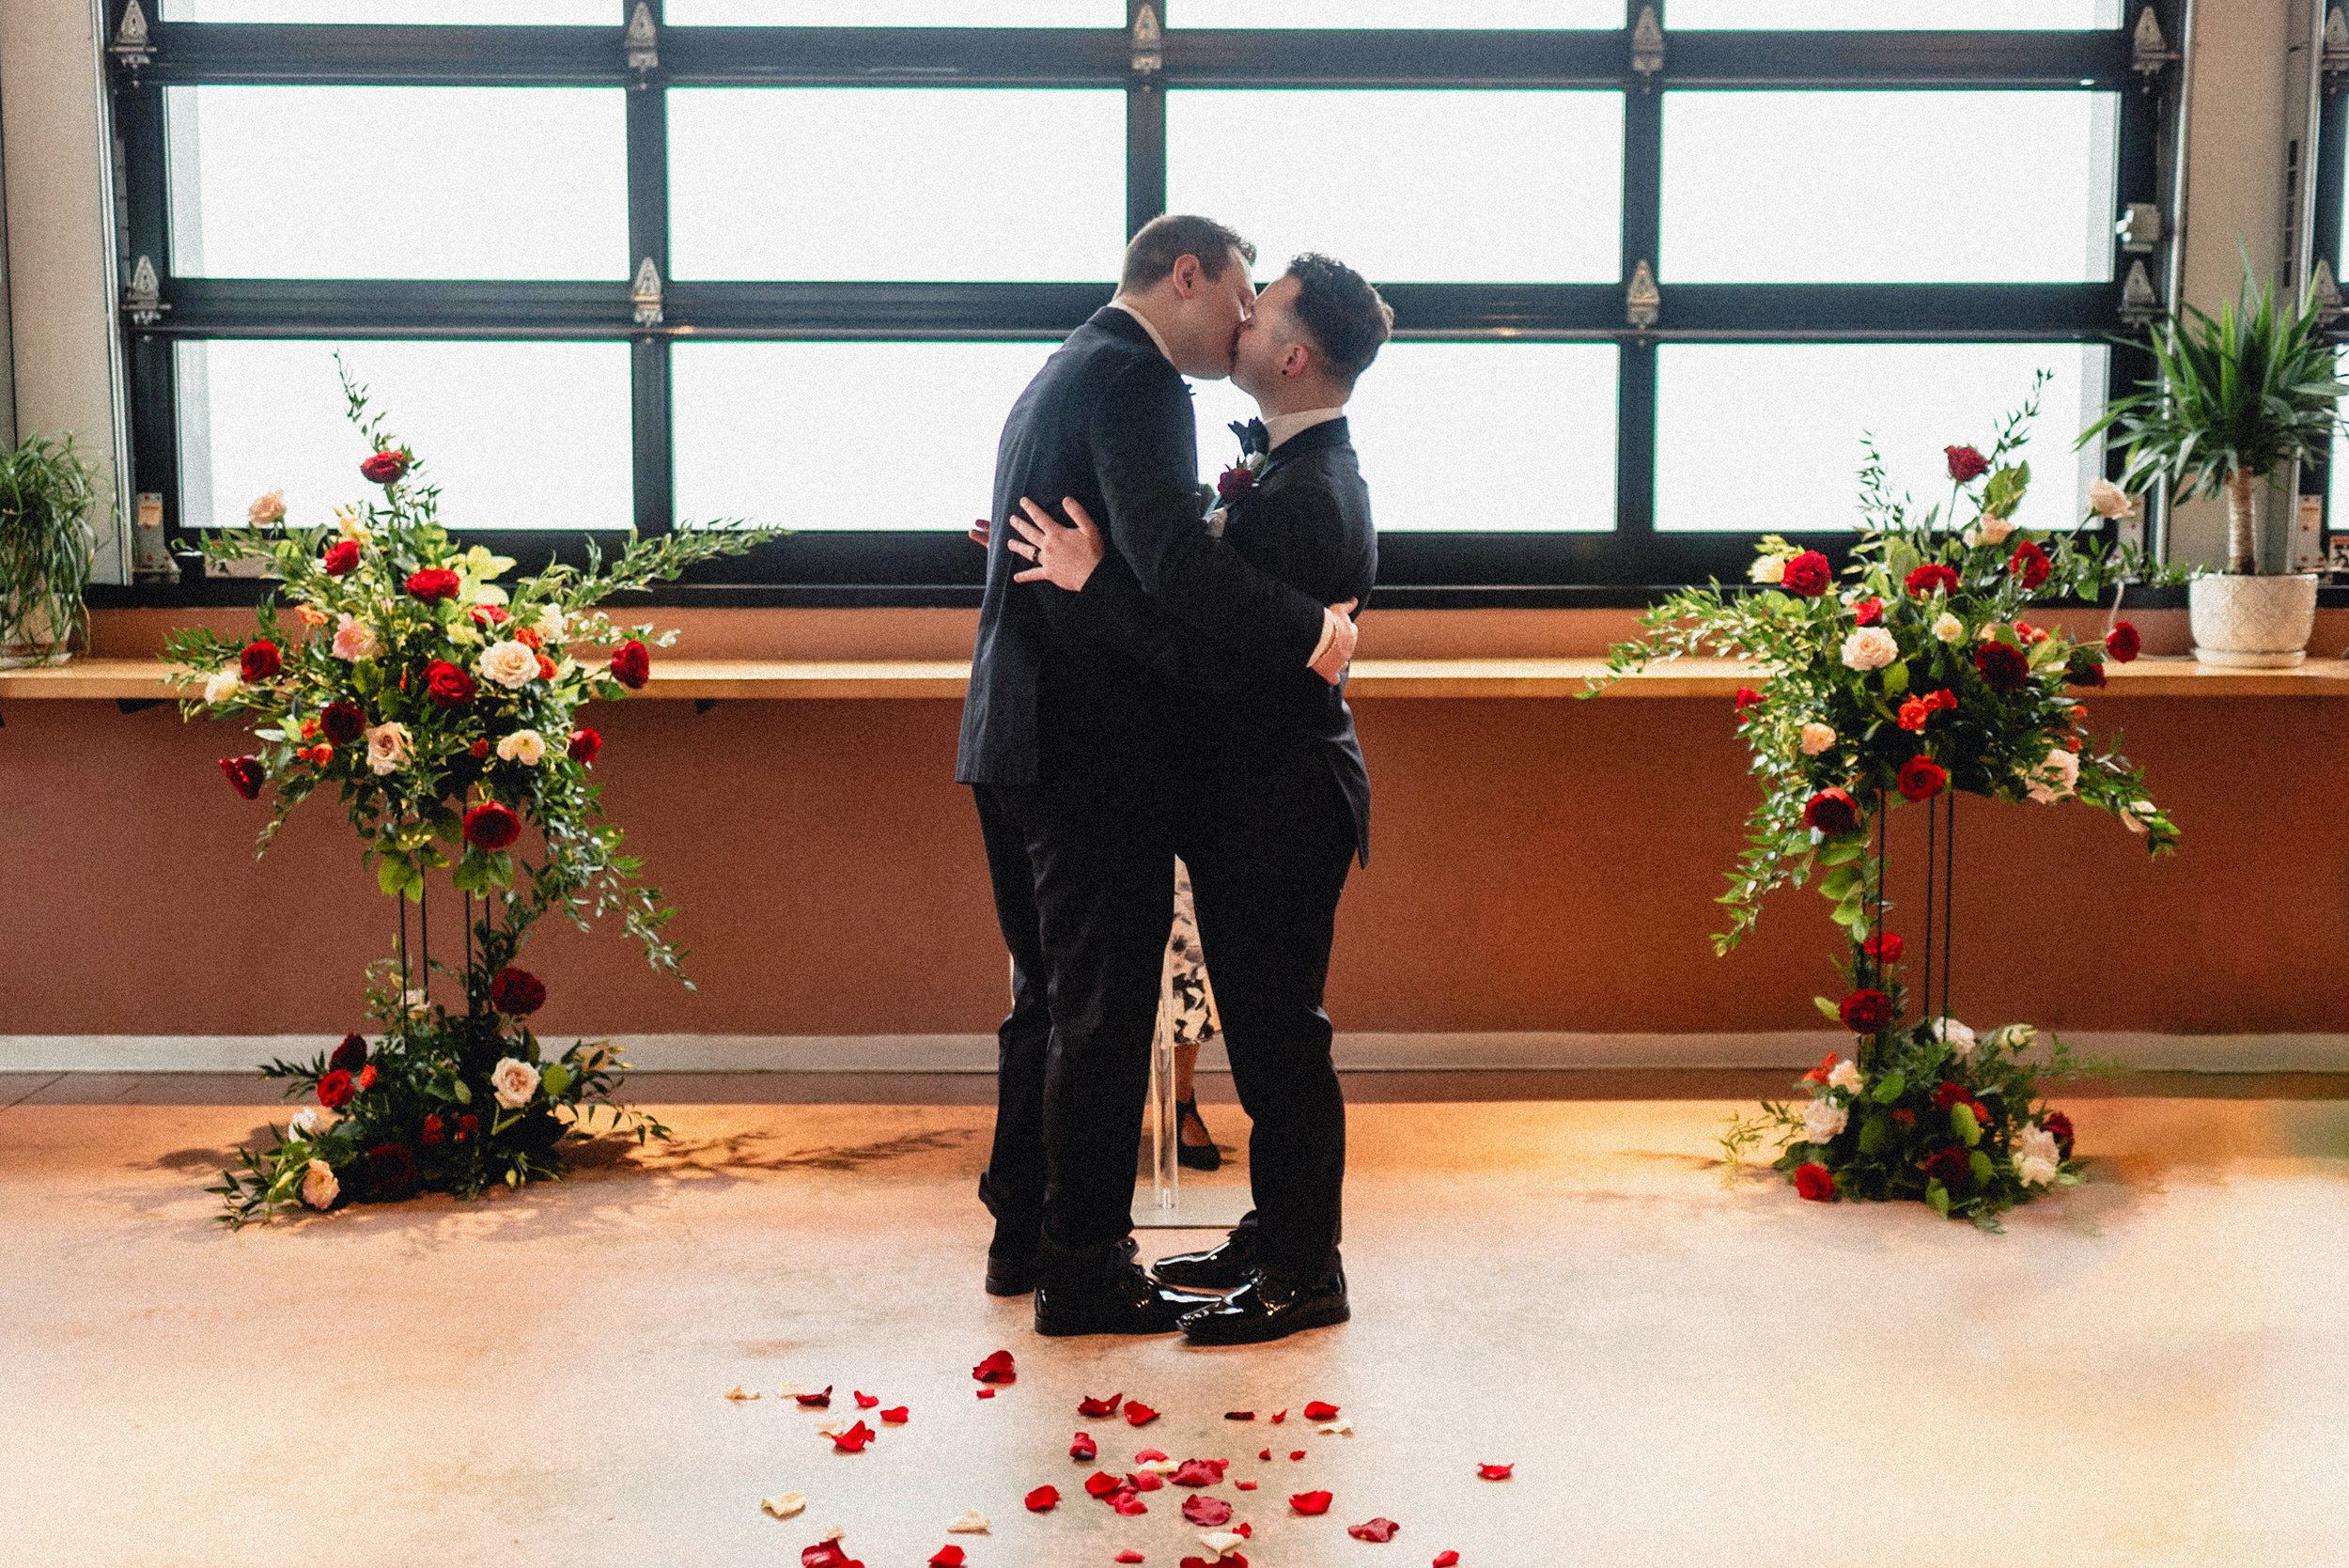 Requiem Images - LGBTQ Pittsburgh PA WV Elopement Wedding Photographer - Randy Zach Tryp Hotel Rooftop Micro Wedding -22.jpg